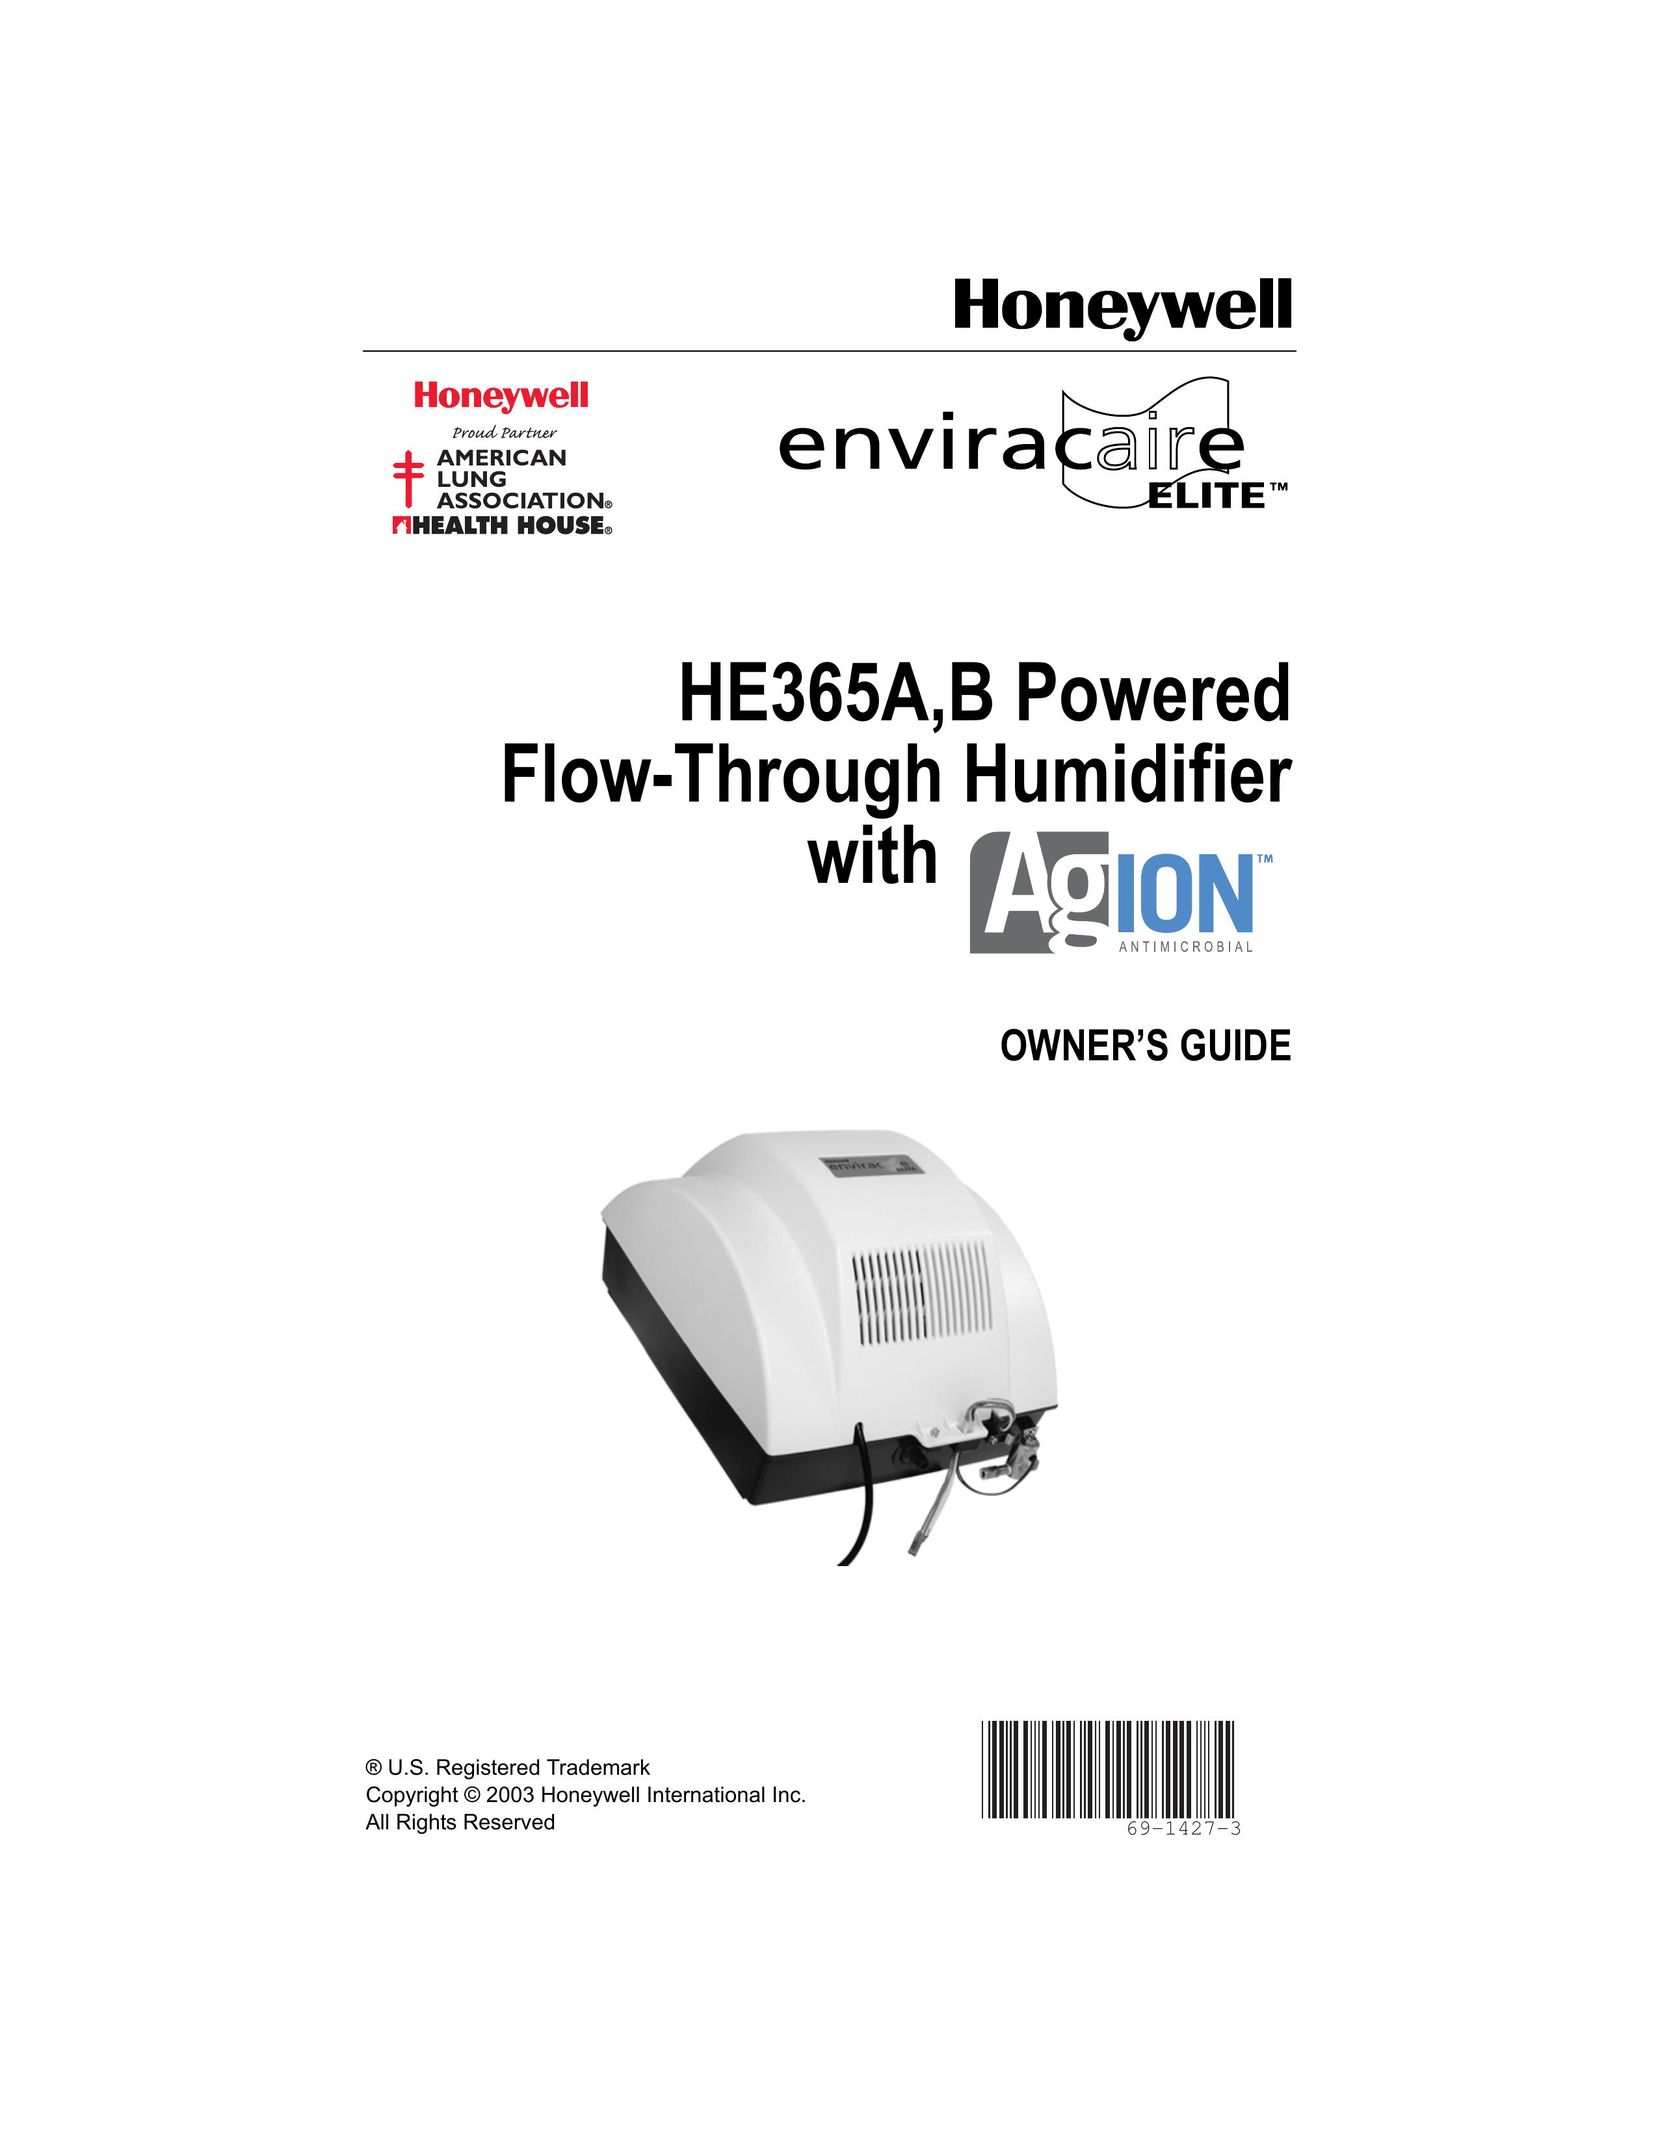 Honeywell HE365A Humidifier User Manual